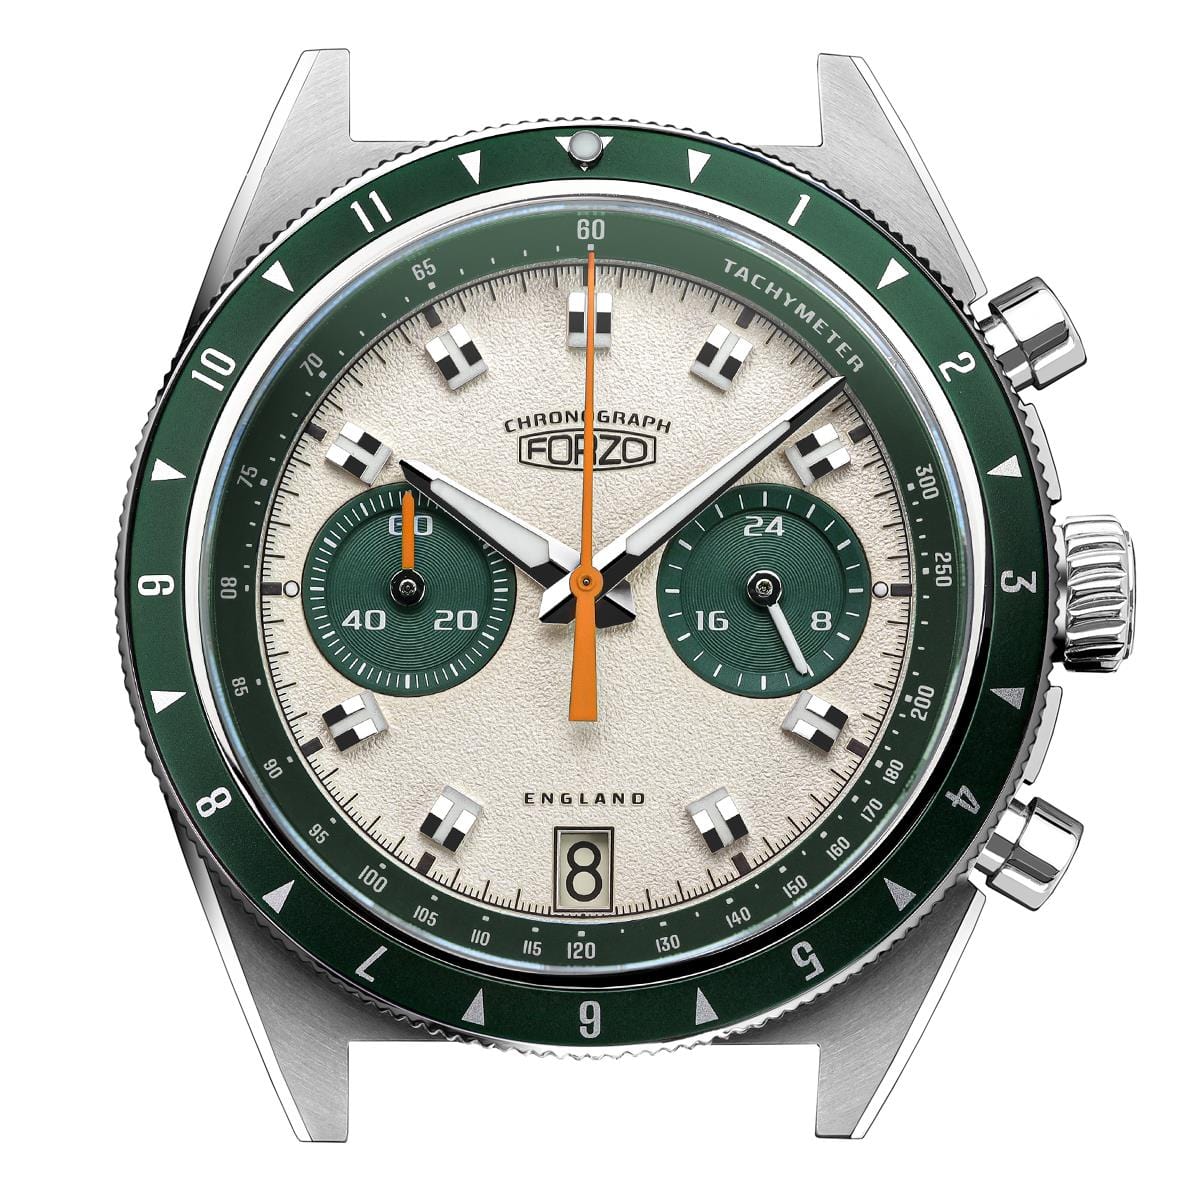 FORZO G2 Drive King Chronograph Watch - Cream / Green RWB046-WH